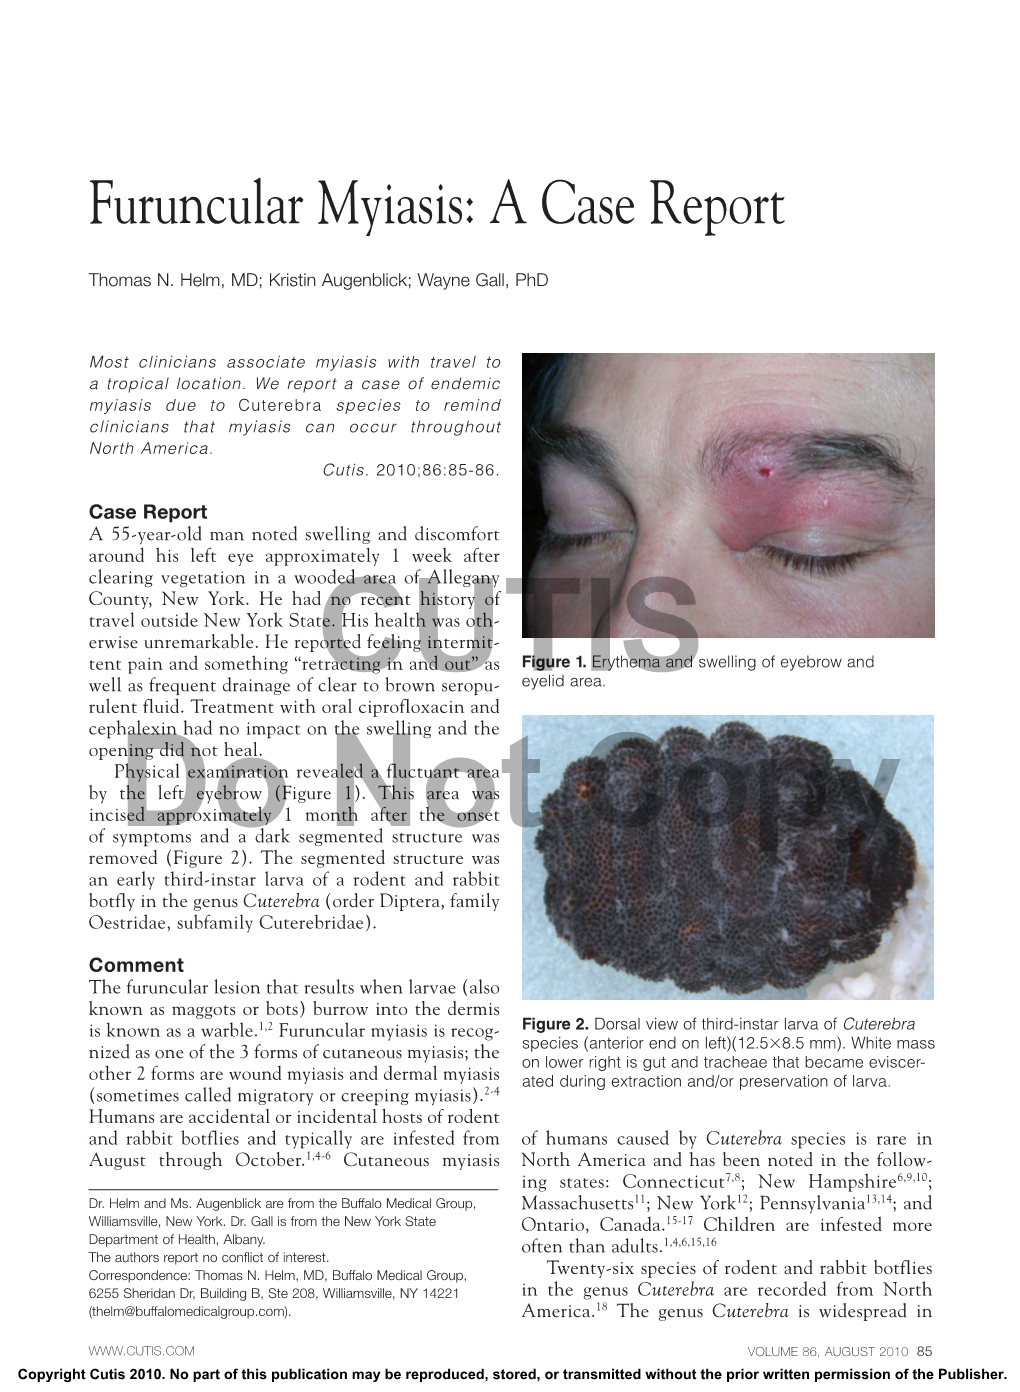 Furuncular Myiasis: a Case Report